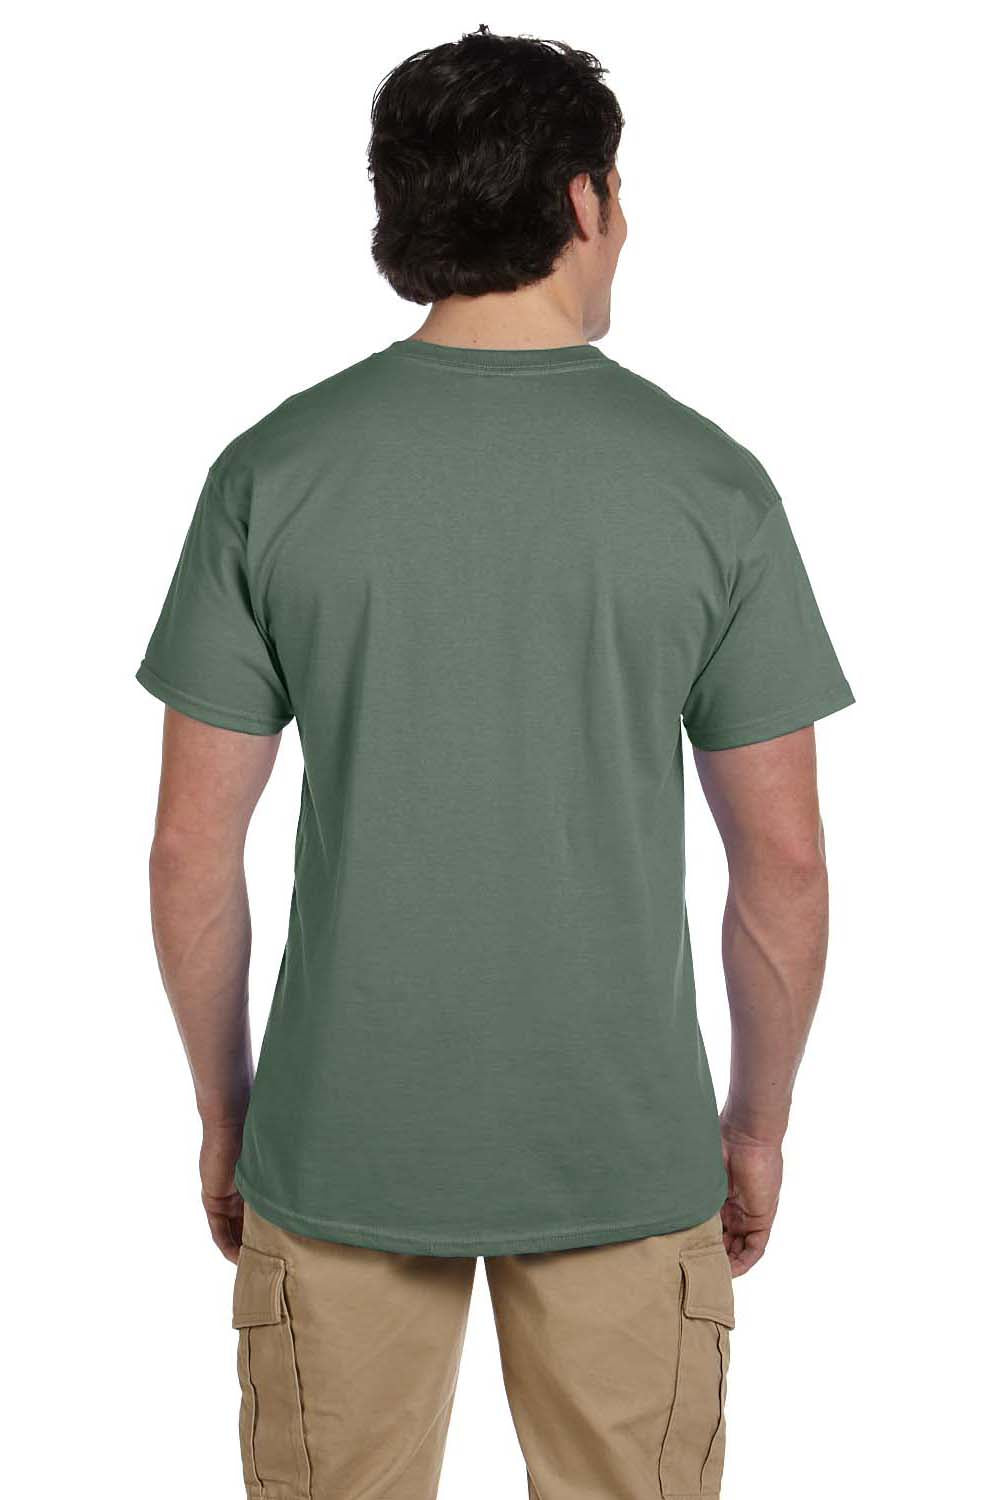 Hanes 5170 Mens EcoSmart Short Sleeve Crewneck T-Shirt Heather Green Back